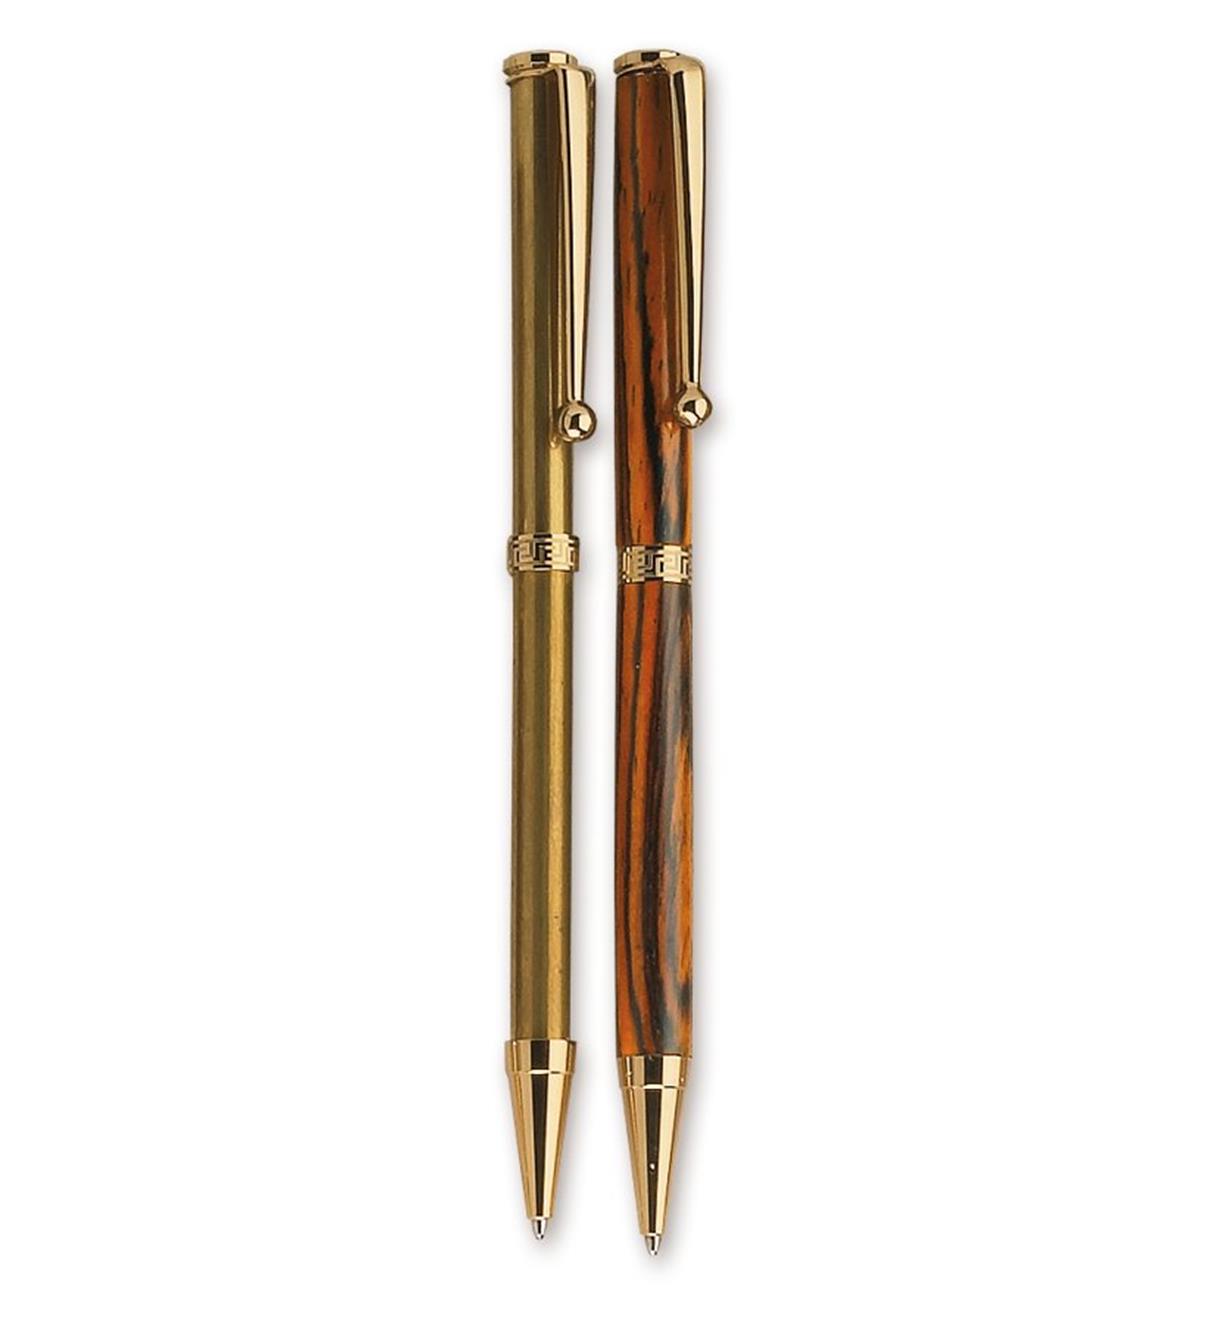 Example of completed Slim-Style Greek Key Pen beside pen hardware